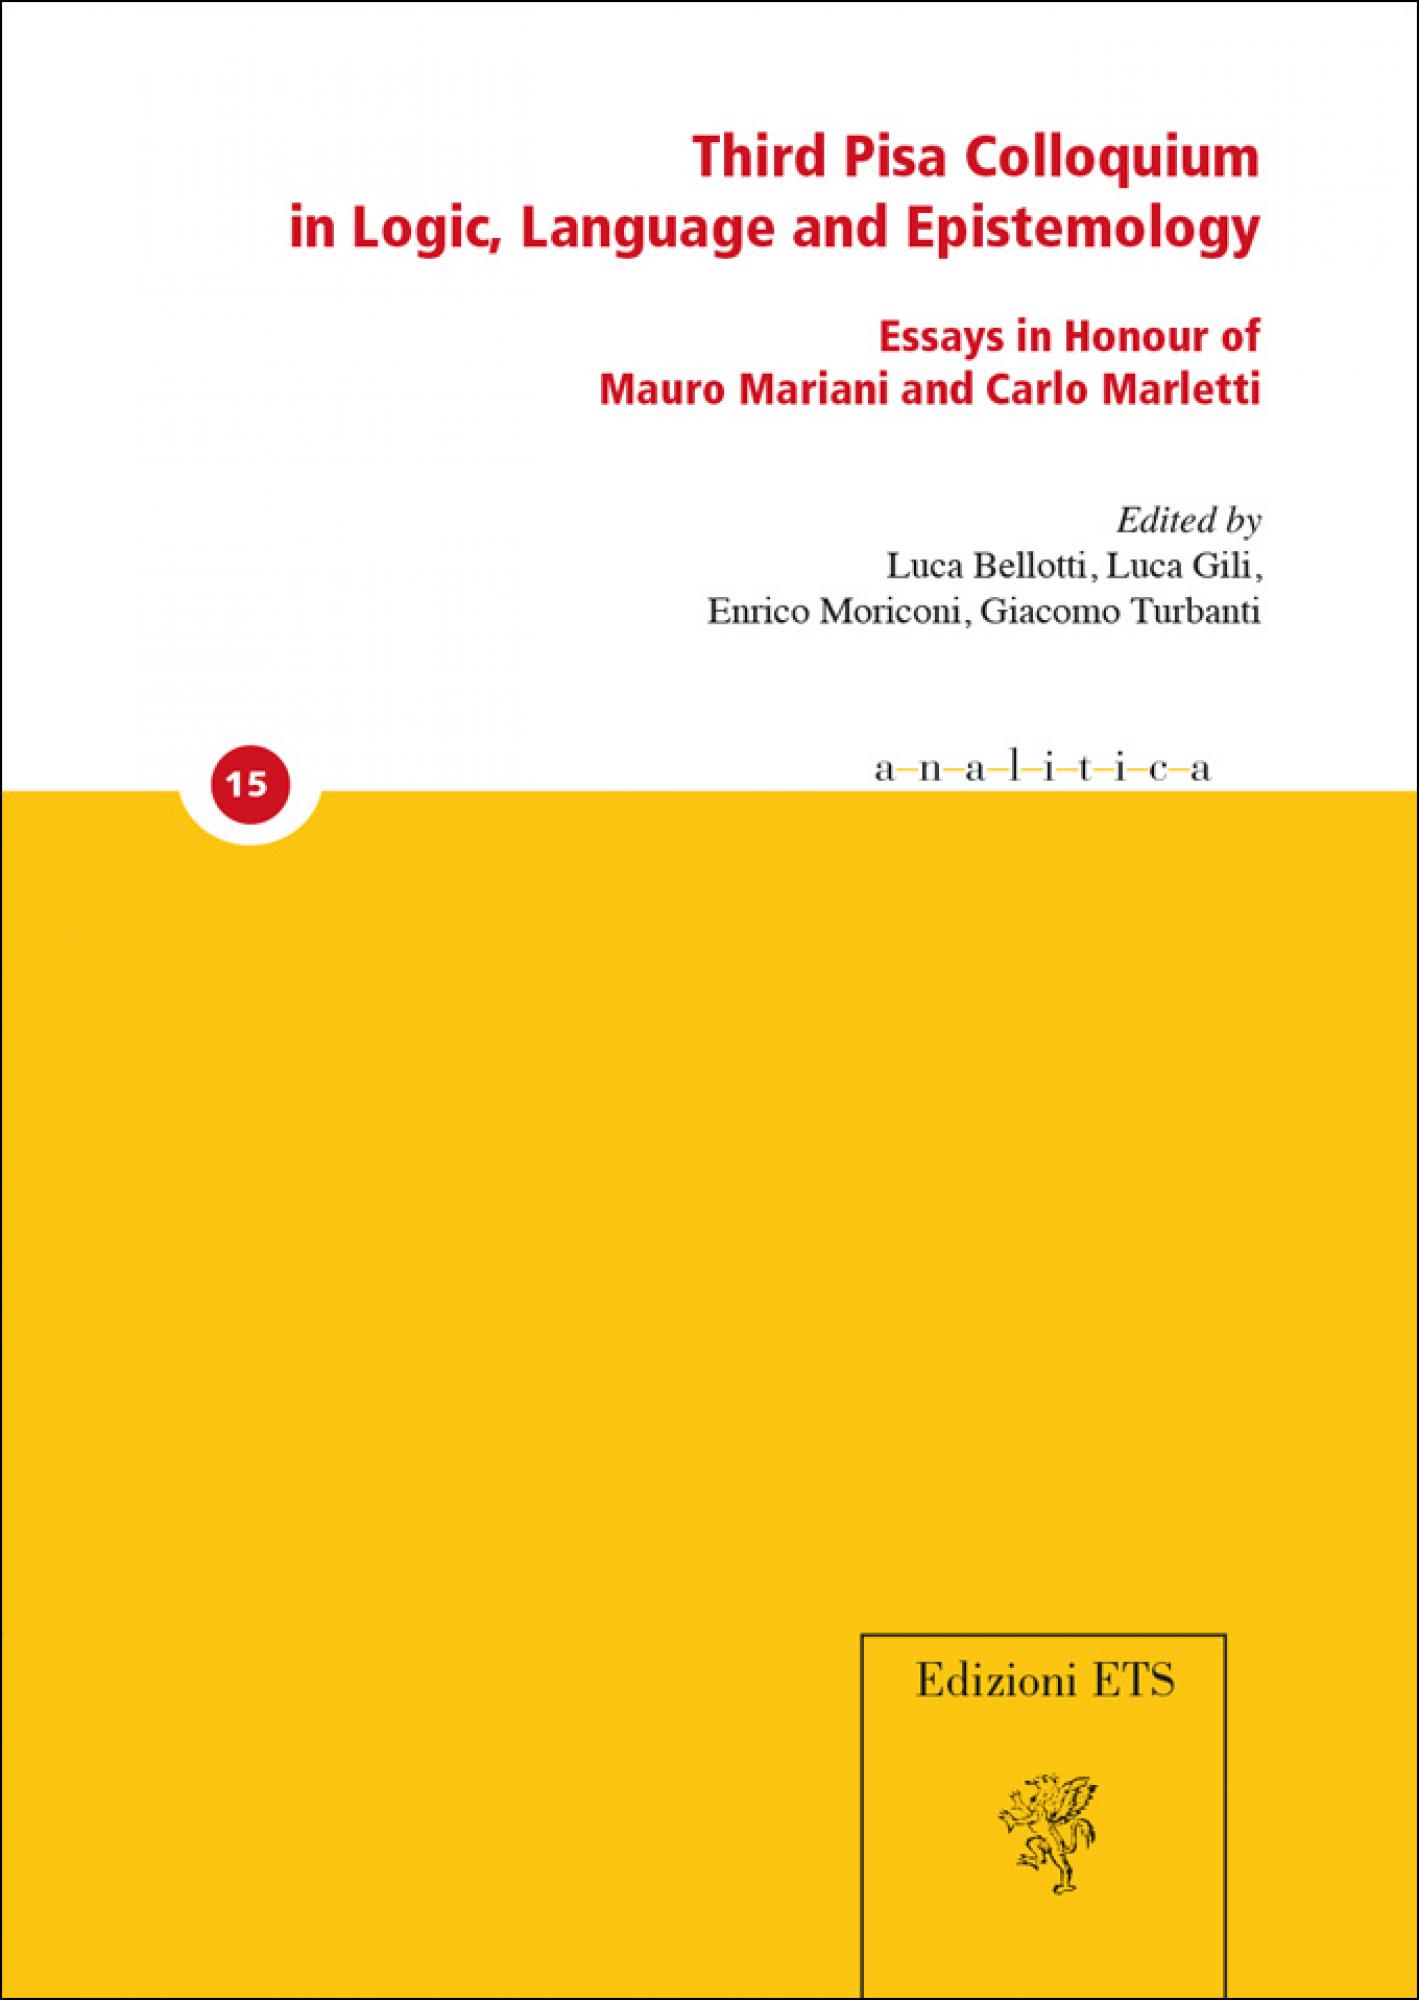 Third Pisa Colloquium in Logic, Language and Epistemology.Essays in Honour of Mauro Mariani and Carlo Marletti